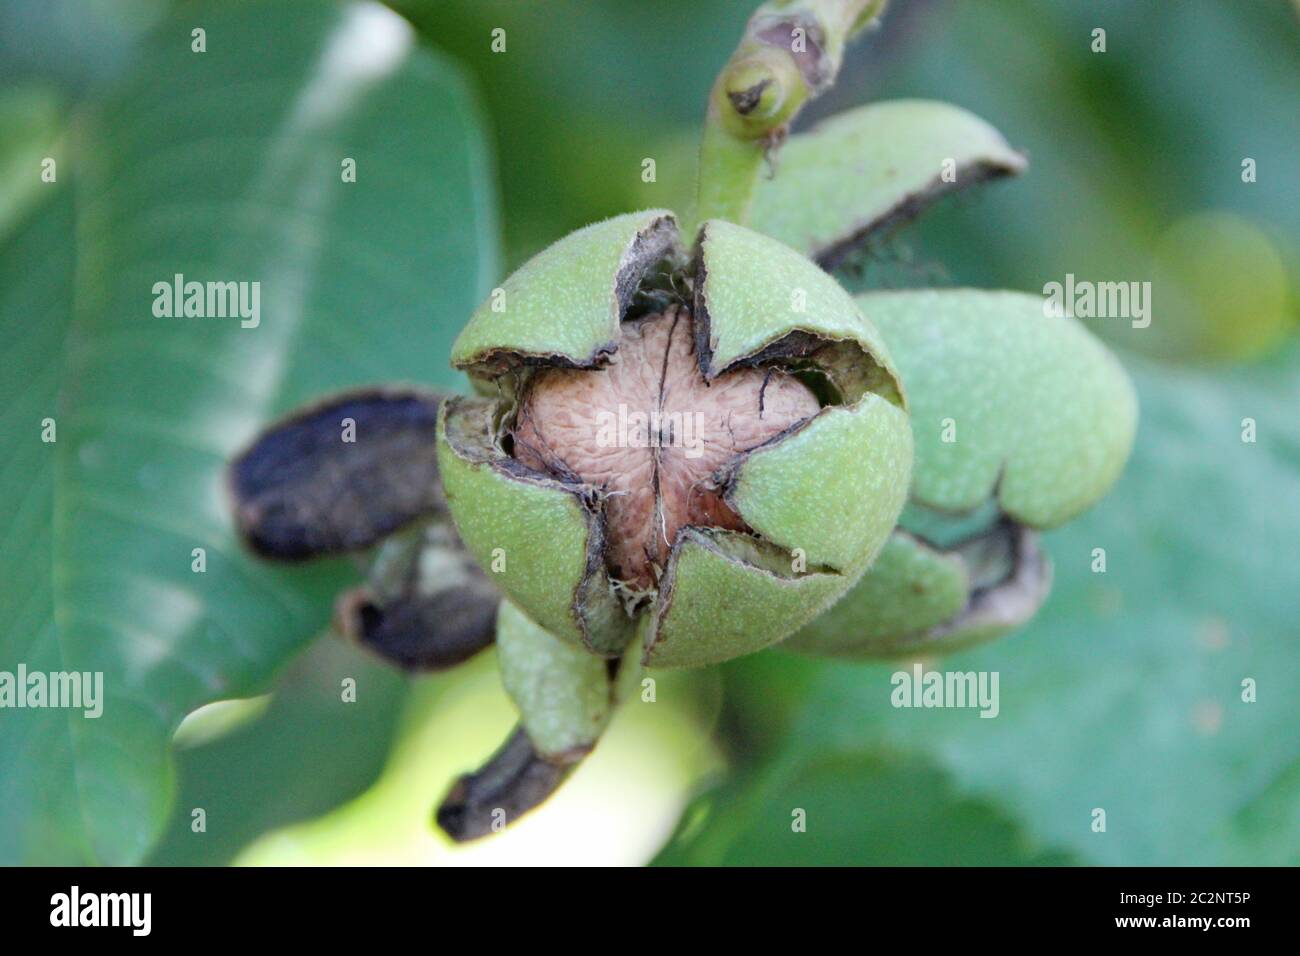 Juglans regia fruit ripening among green foliage on tree. Nut growing on tree branch Stock Photo